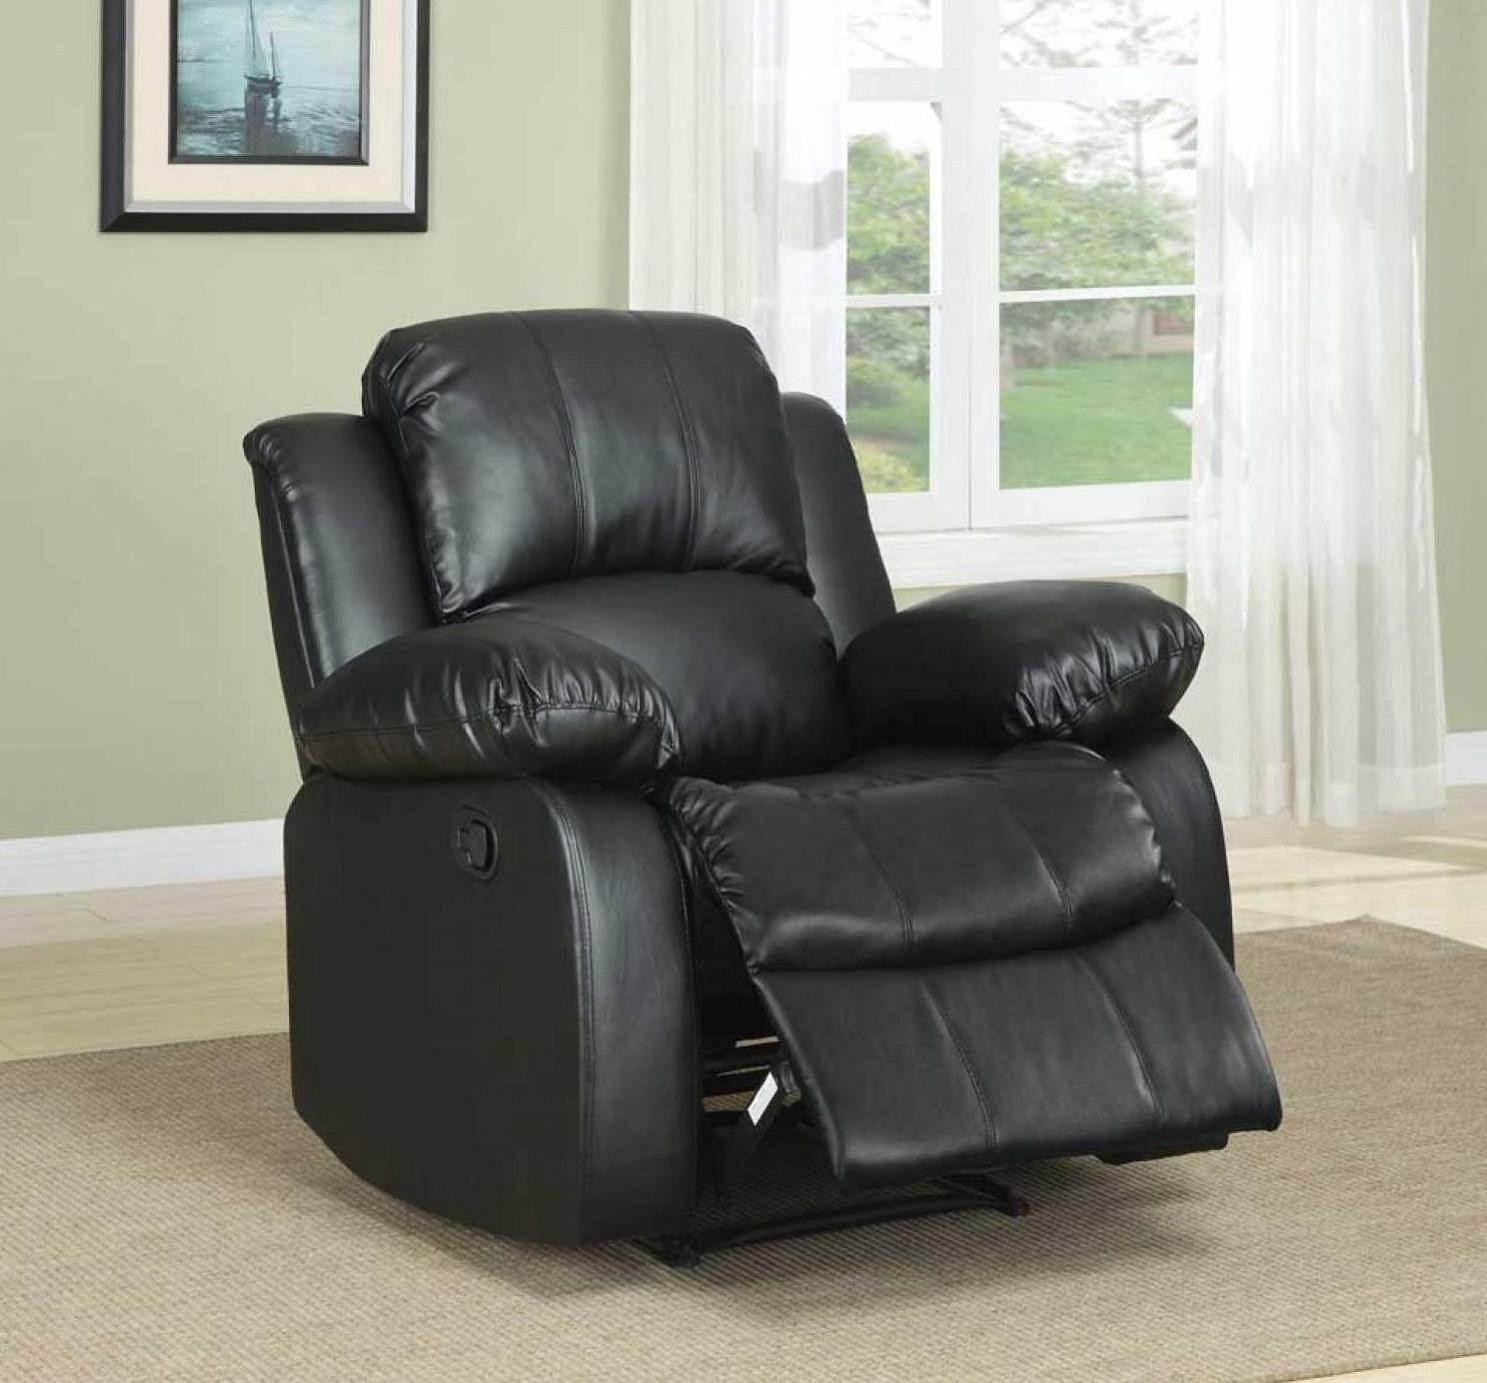 Bradley Manual Recliner Chair Pic 2 ( Heading Manual Recliner Black Chair